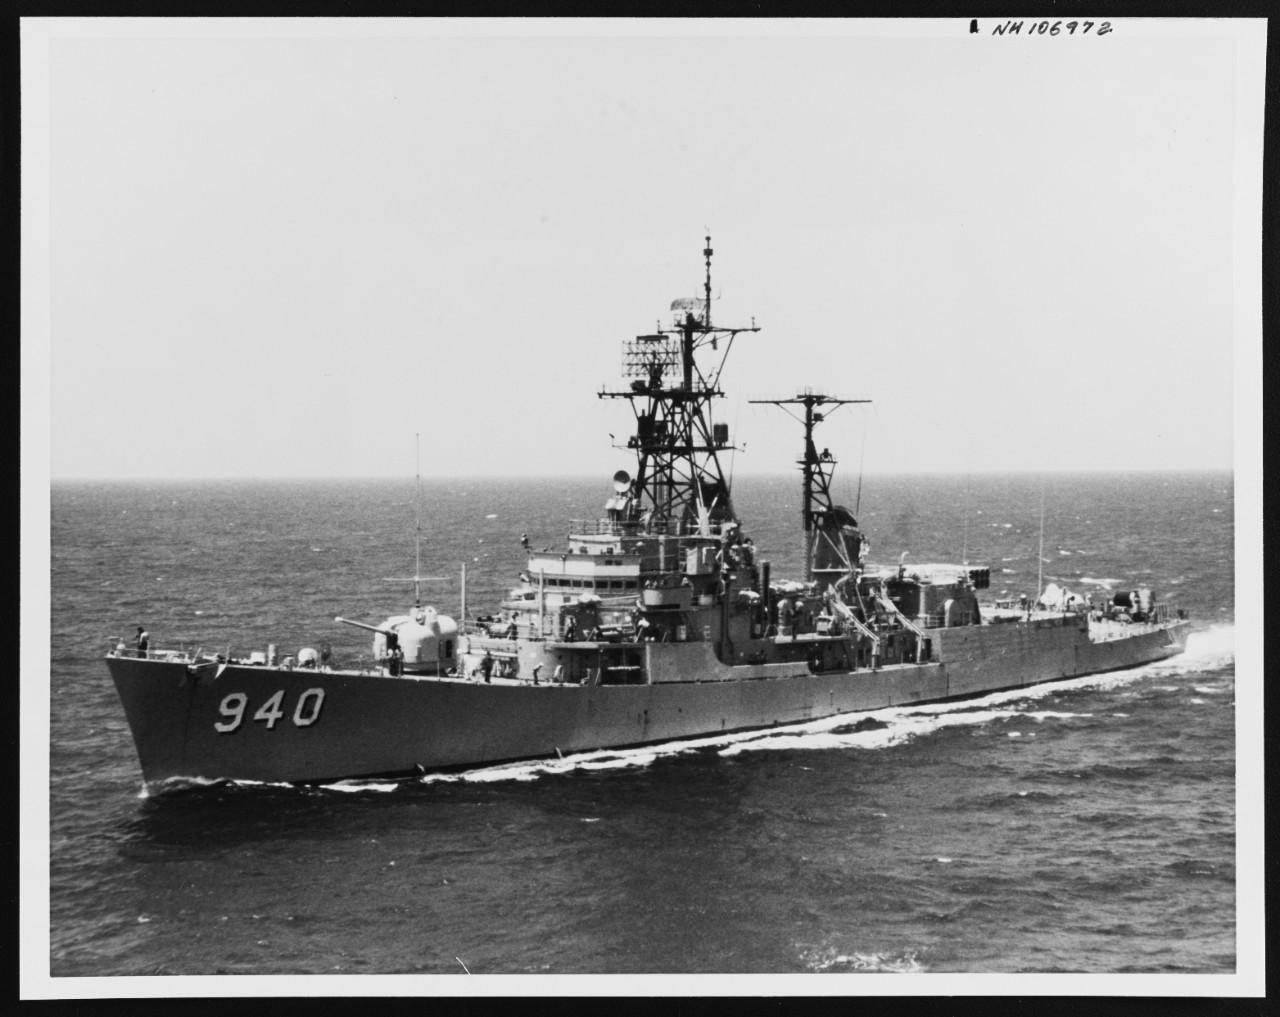 Photo # NH 106972  USS Manley